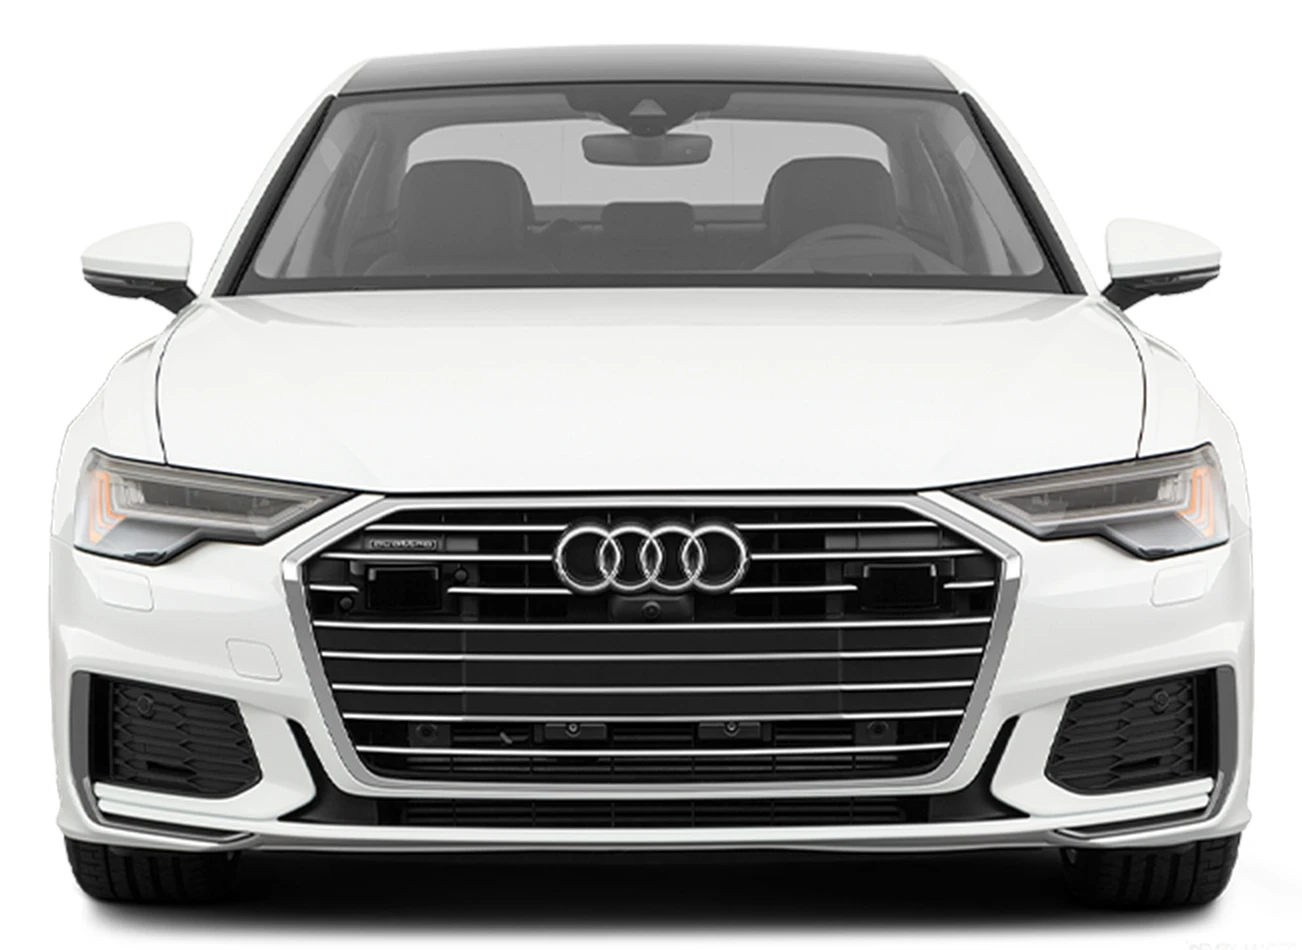 2020 Audi A6 Review: Front Exterior View | CarMax